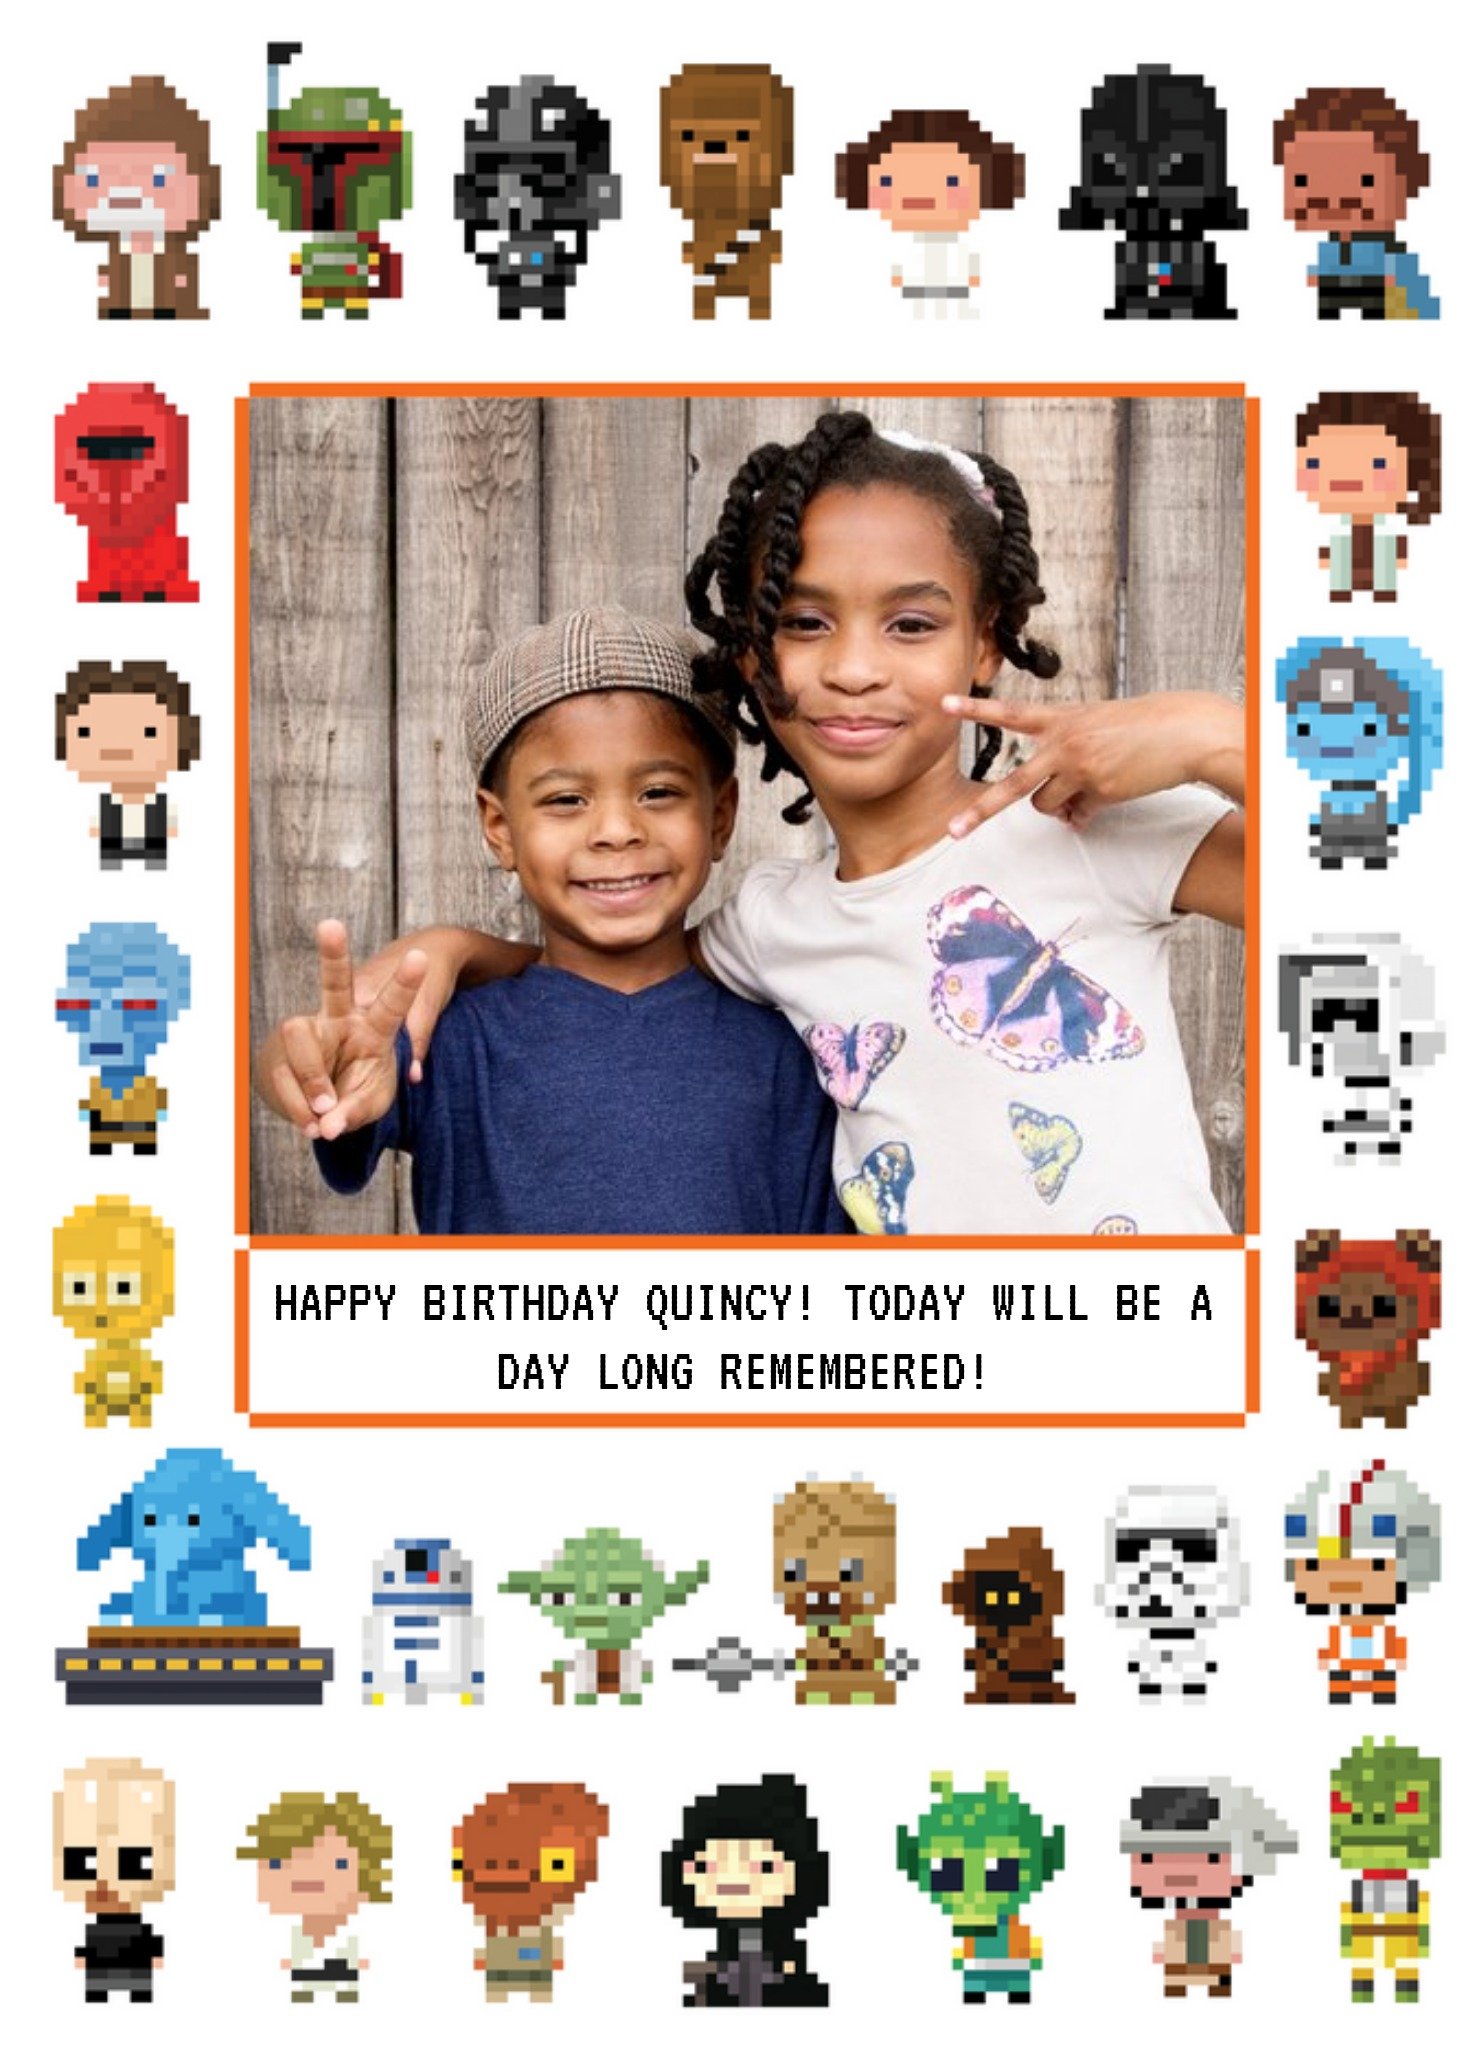 Disney Star Wars 8 Bit Gaming Photo Upload Birthday Card Ecard